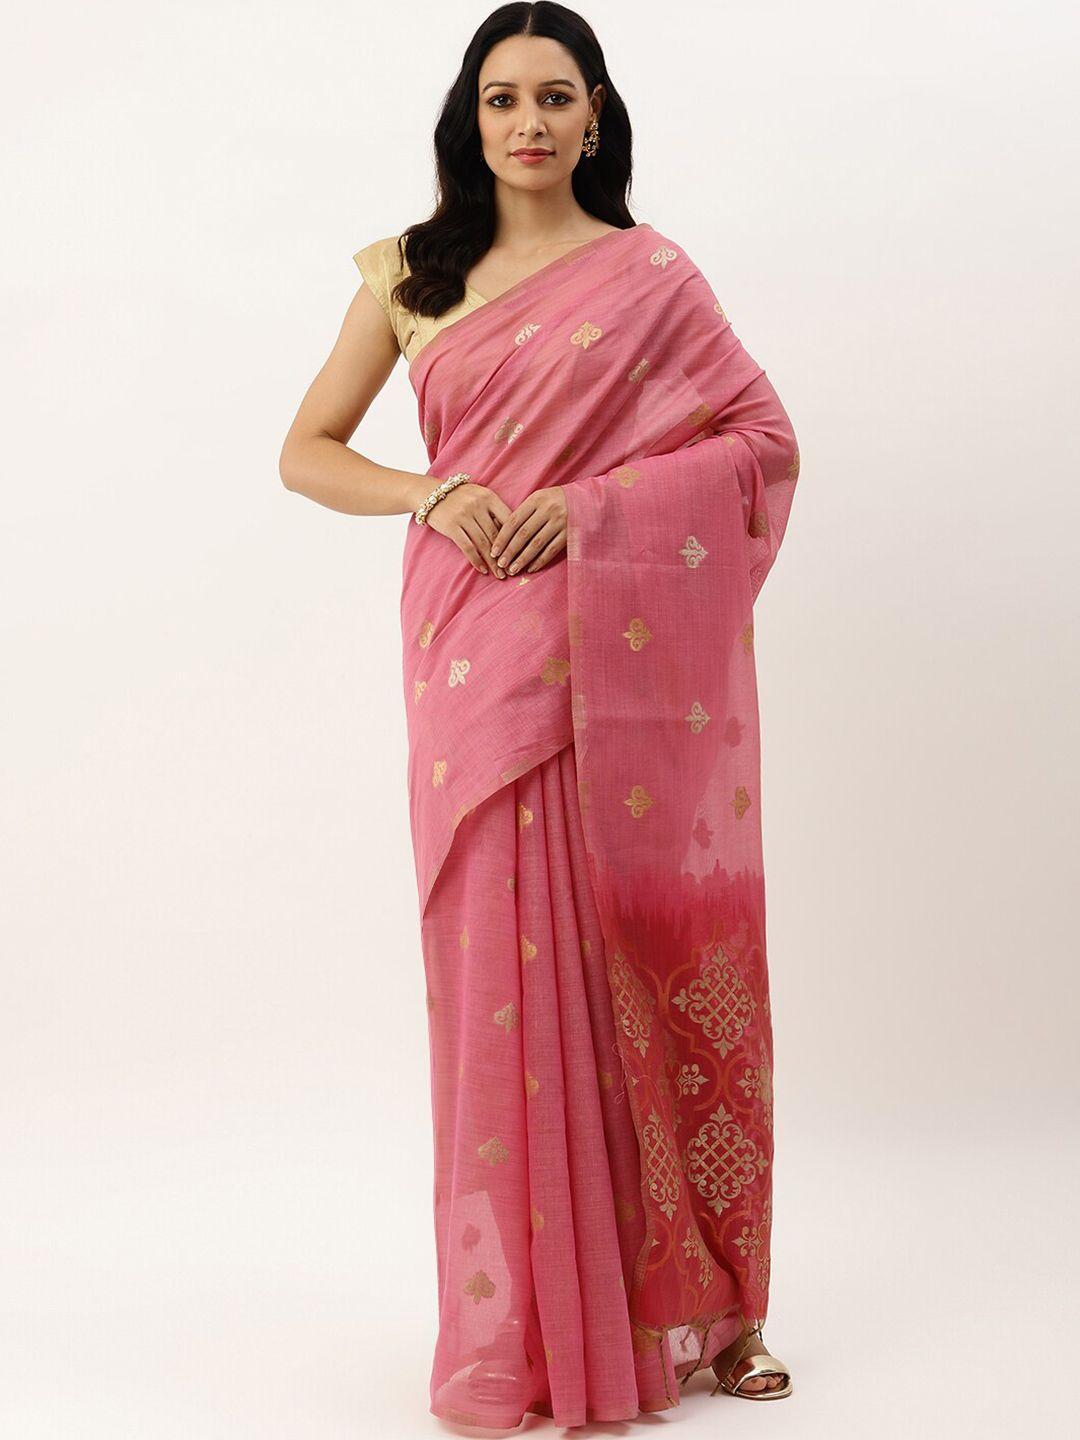 VISHNU WEAVES Women Pink & Gold-Toned Ethnic Motifs Pure Linen Banarasi Saree